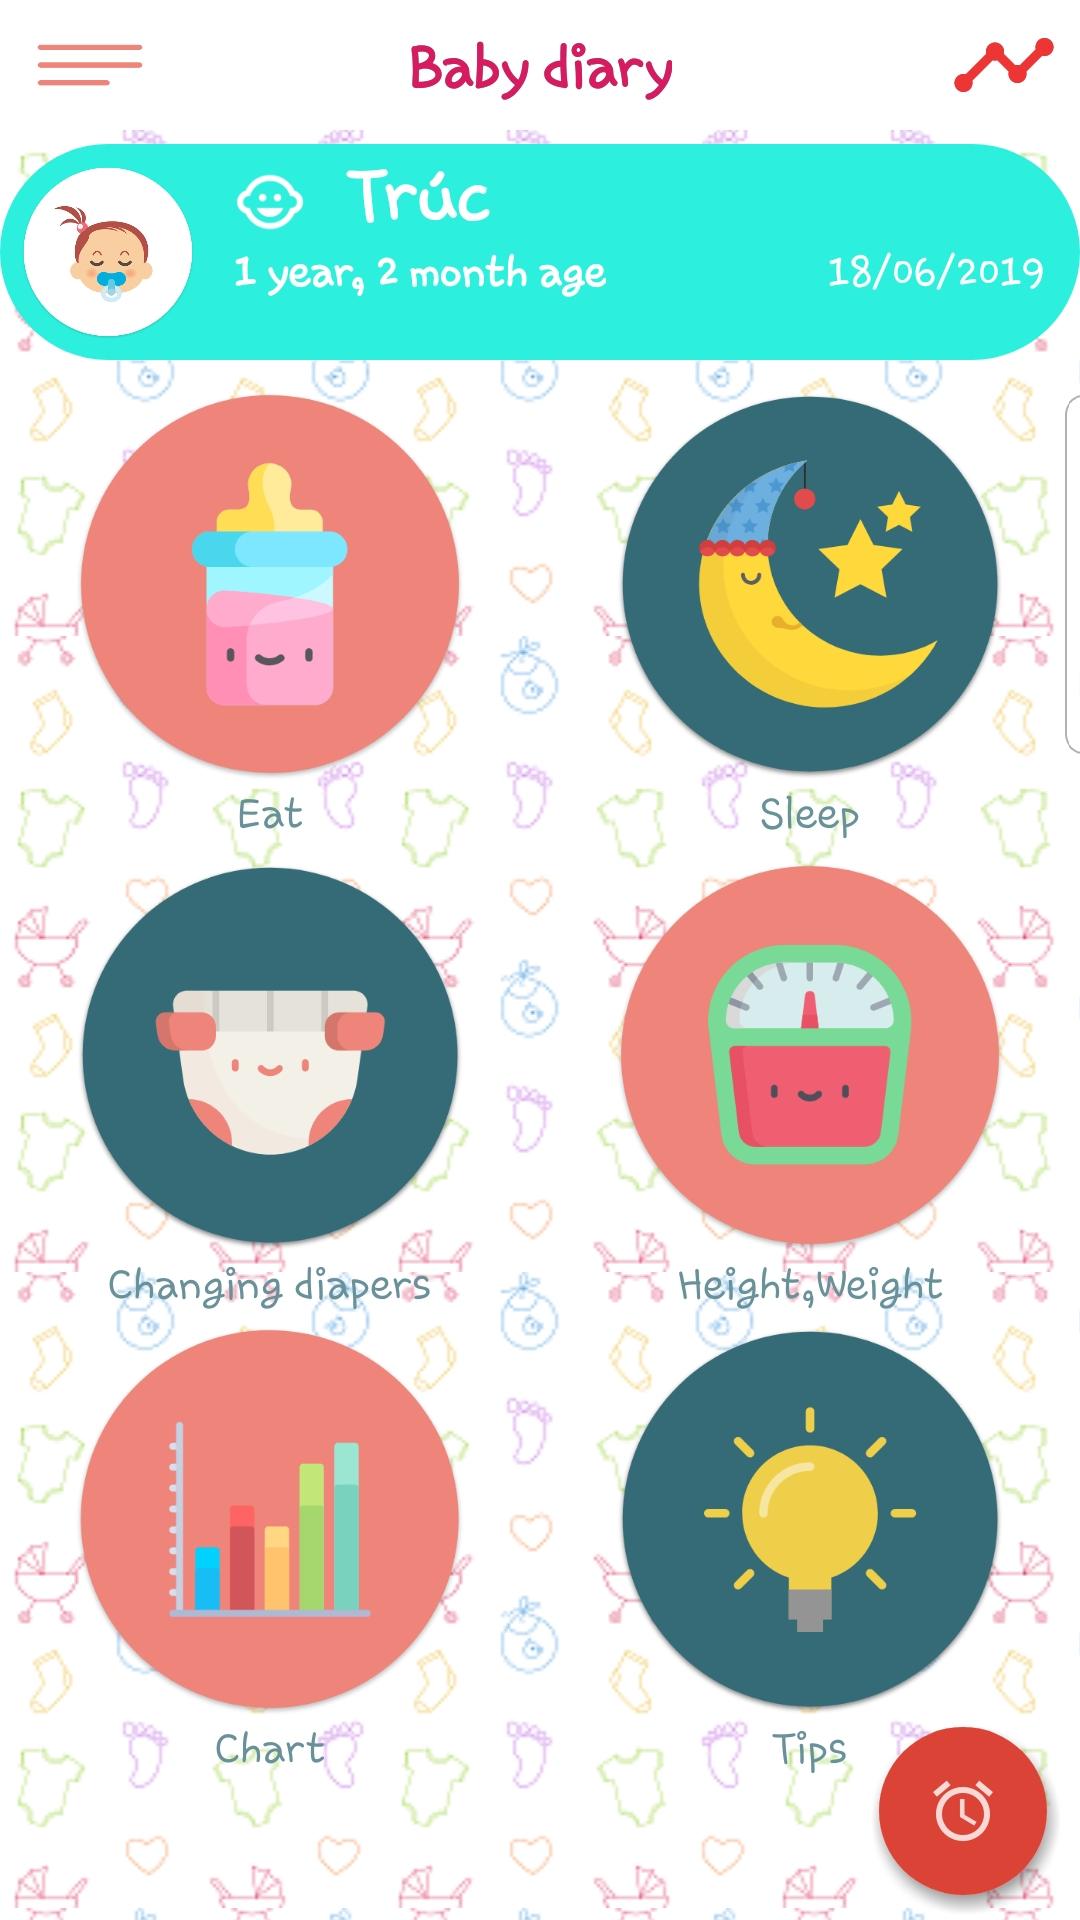 Baby Diary Feeding, Sleep and Healthy tracker 1.0 Screenshot 13